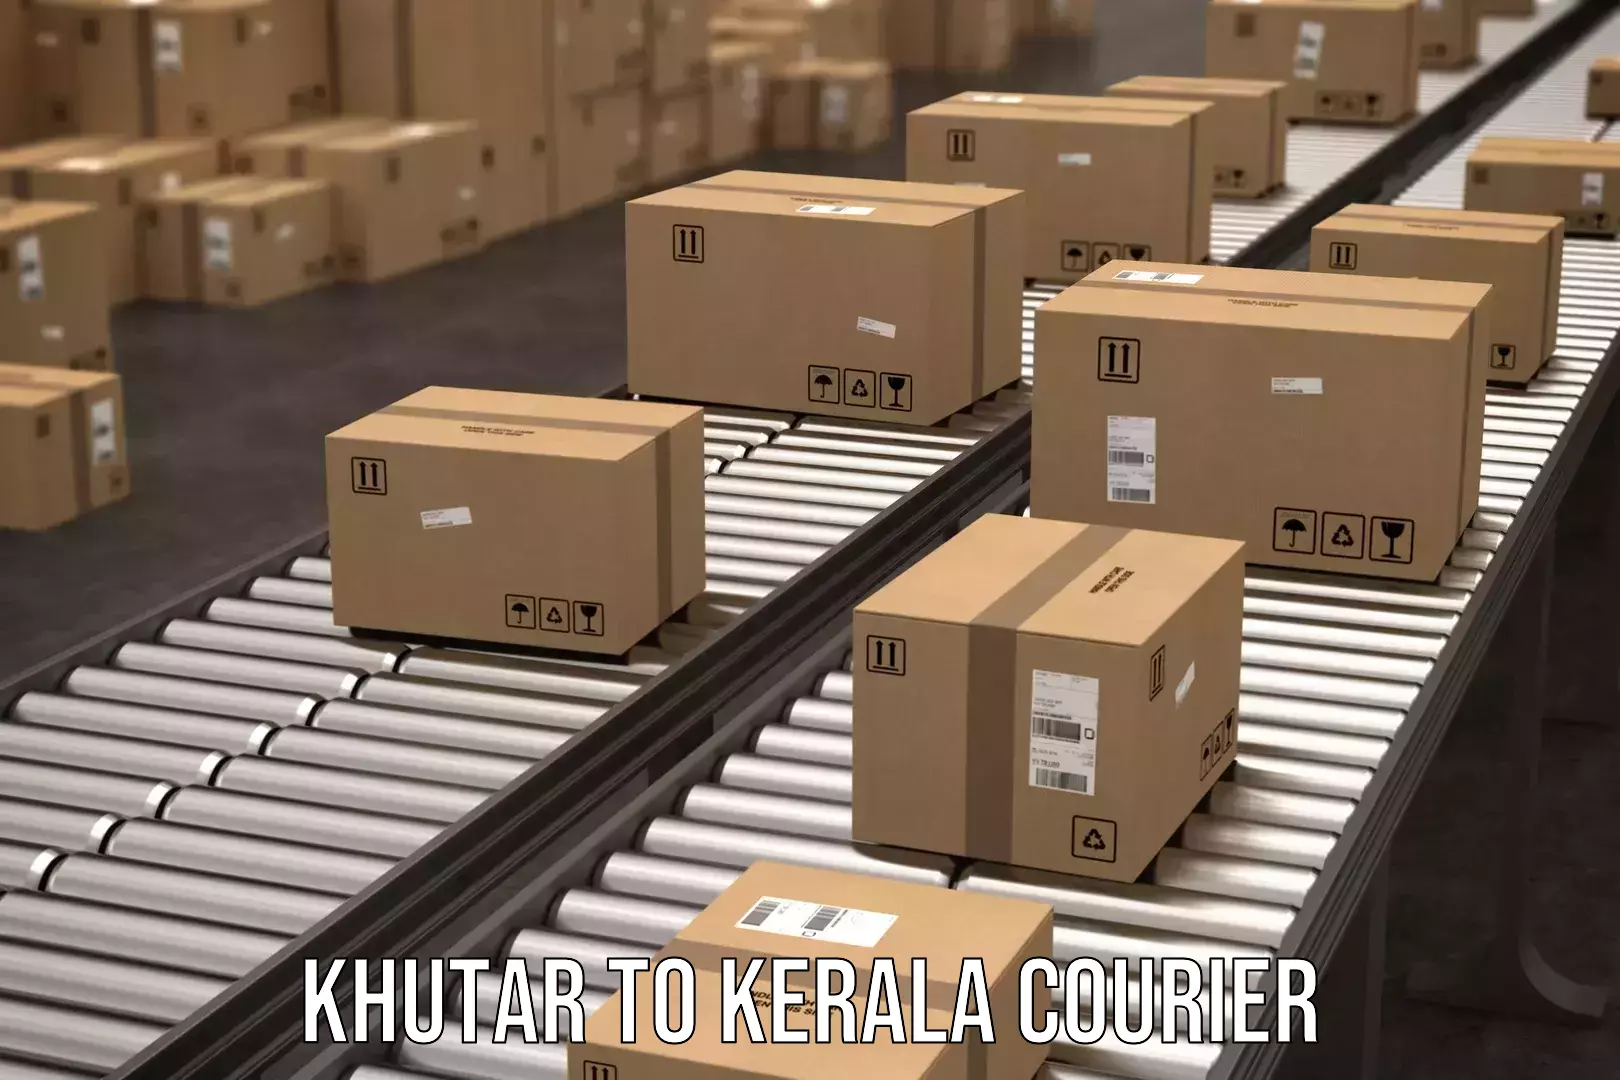 Online shipping calculator Khutar to Kalanjoor